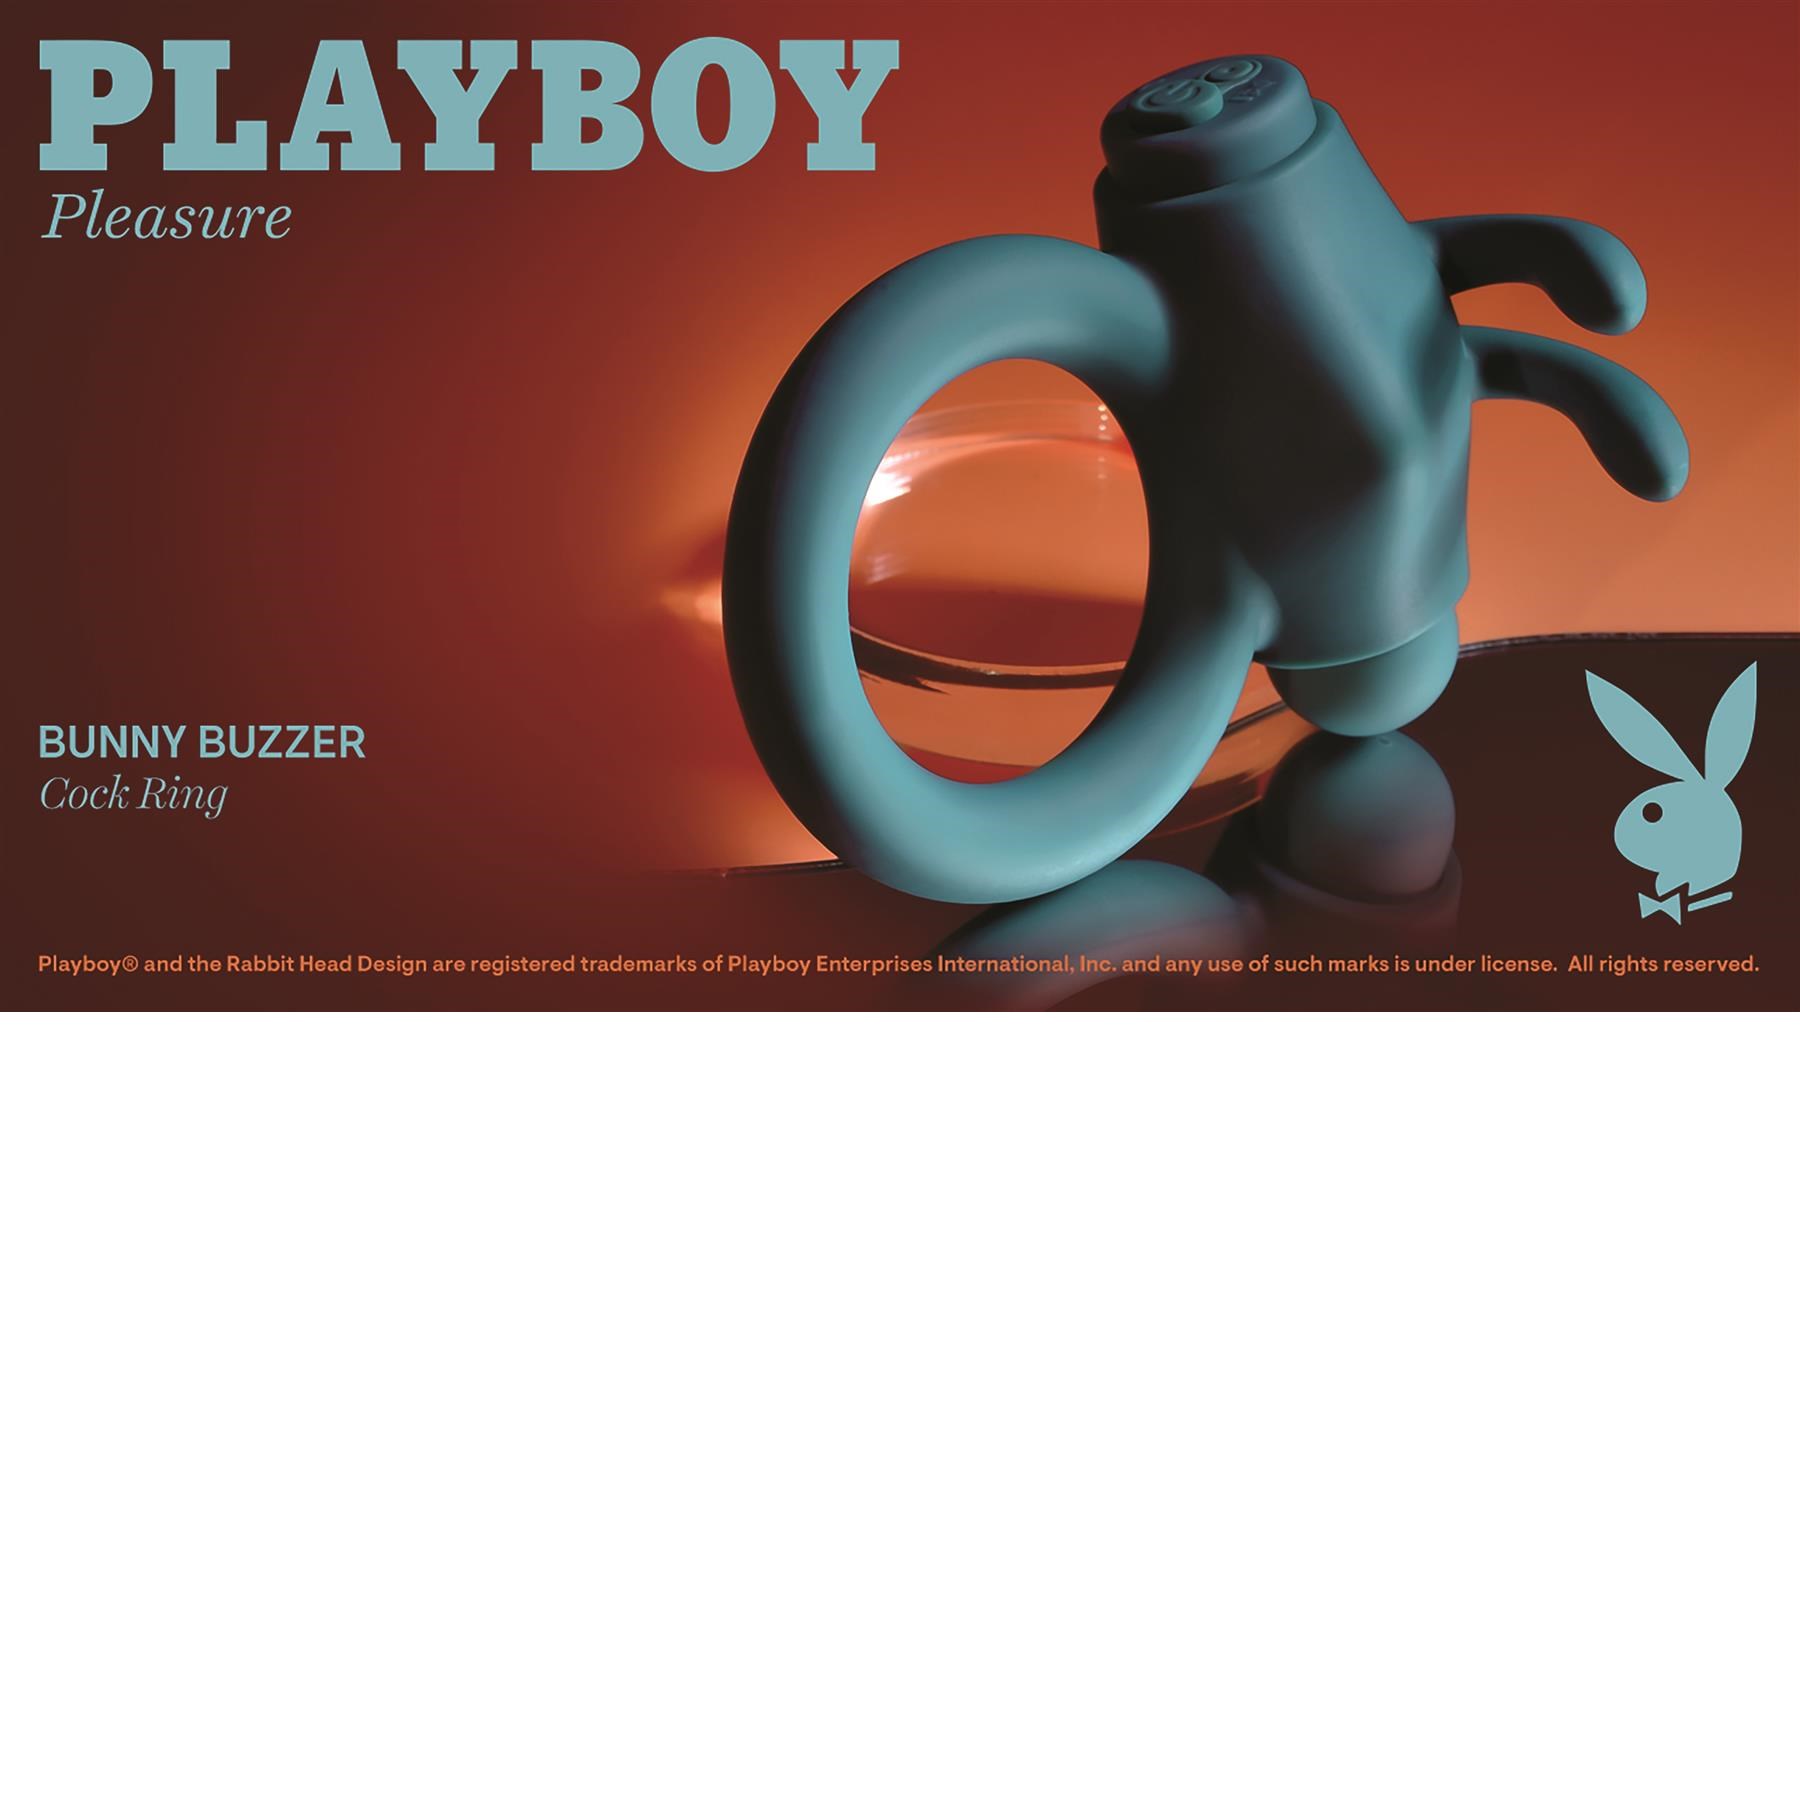 Playboy Pleasure Bunny Buzzer Penis Ring - Lifestyle Image